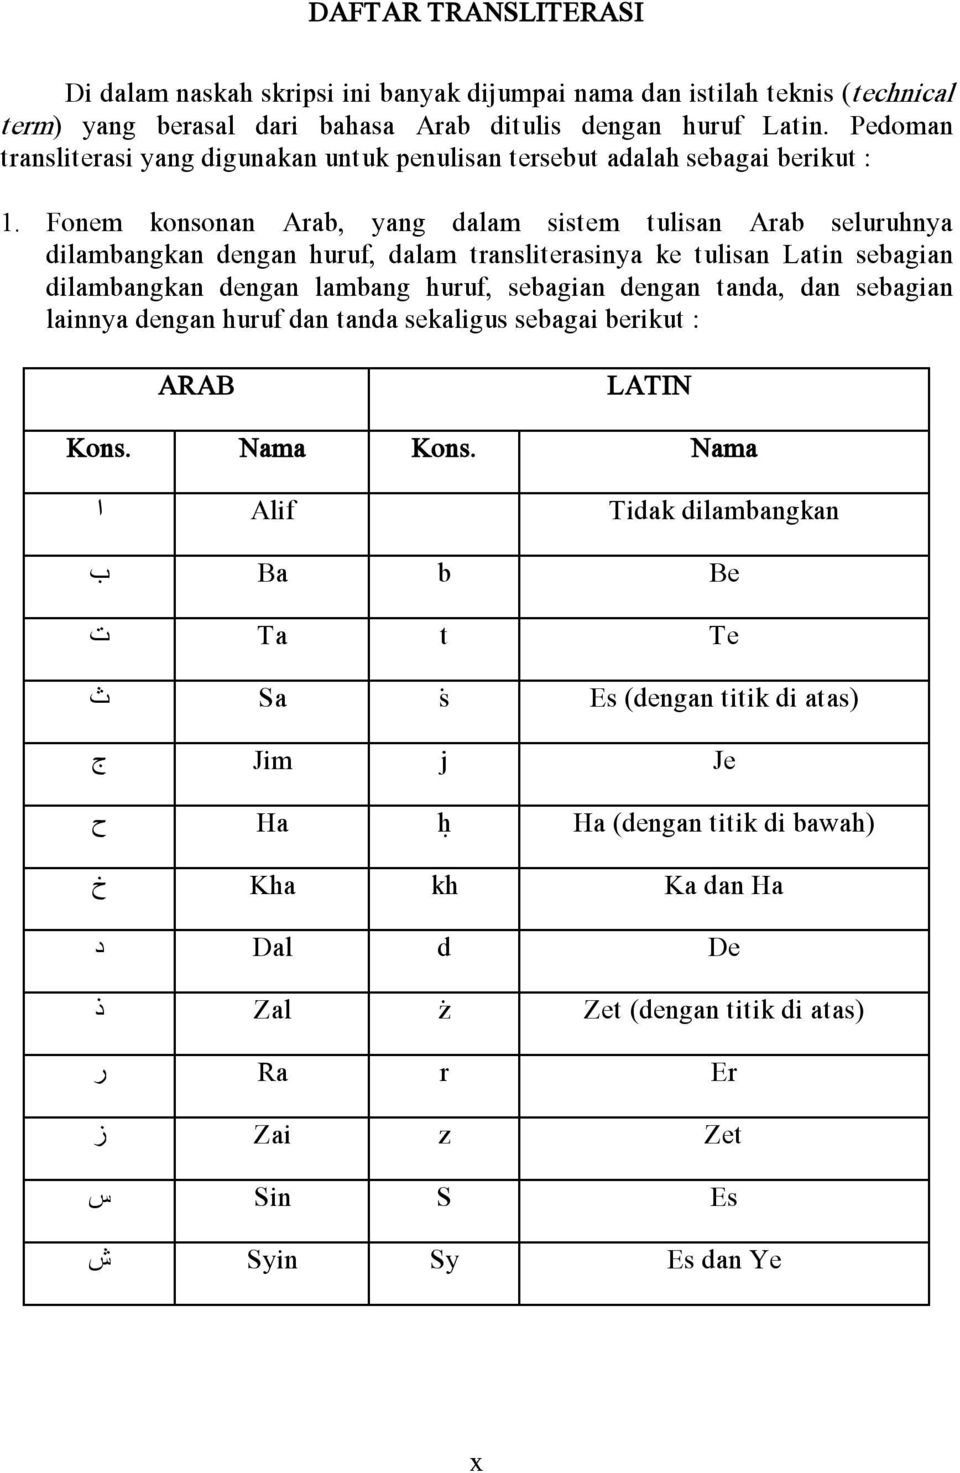 Fonem konsonan Arab, yang dalam sistem tulisan Arab seluruhnya dilambangkan dengan huruf, dalam transliterasinya ke tulisan Latin sebagian dilambangkan dengan lambang huruf, sebagian dengan tanda,